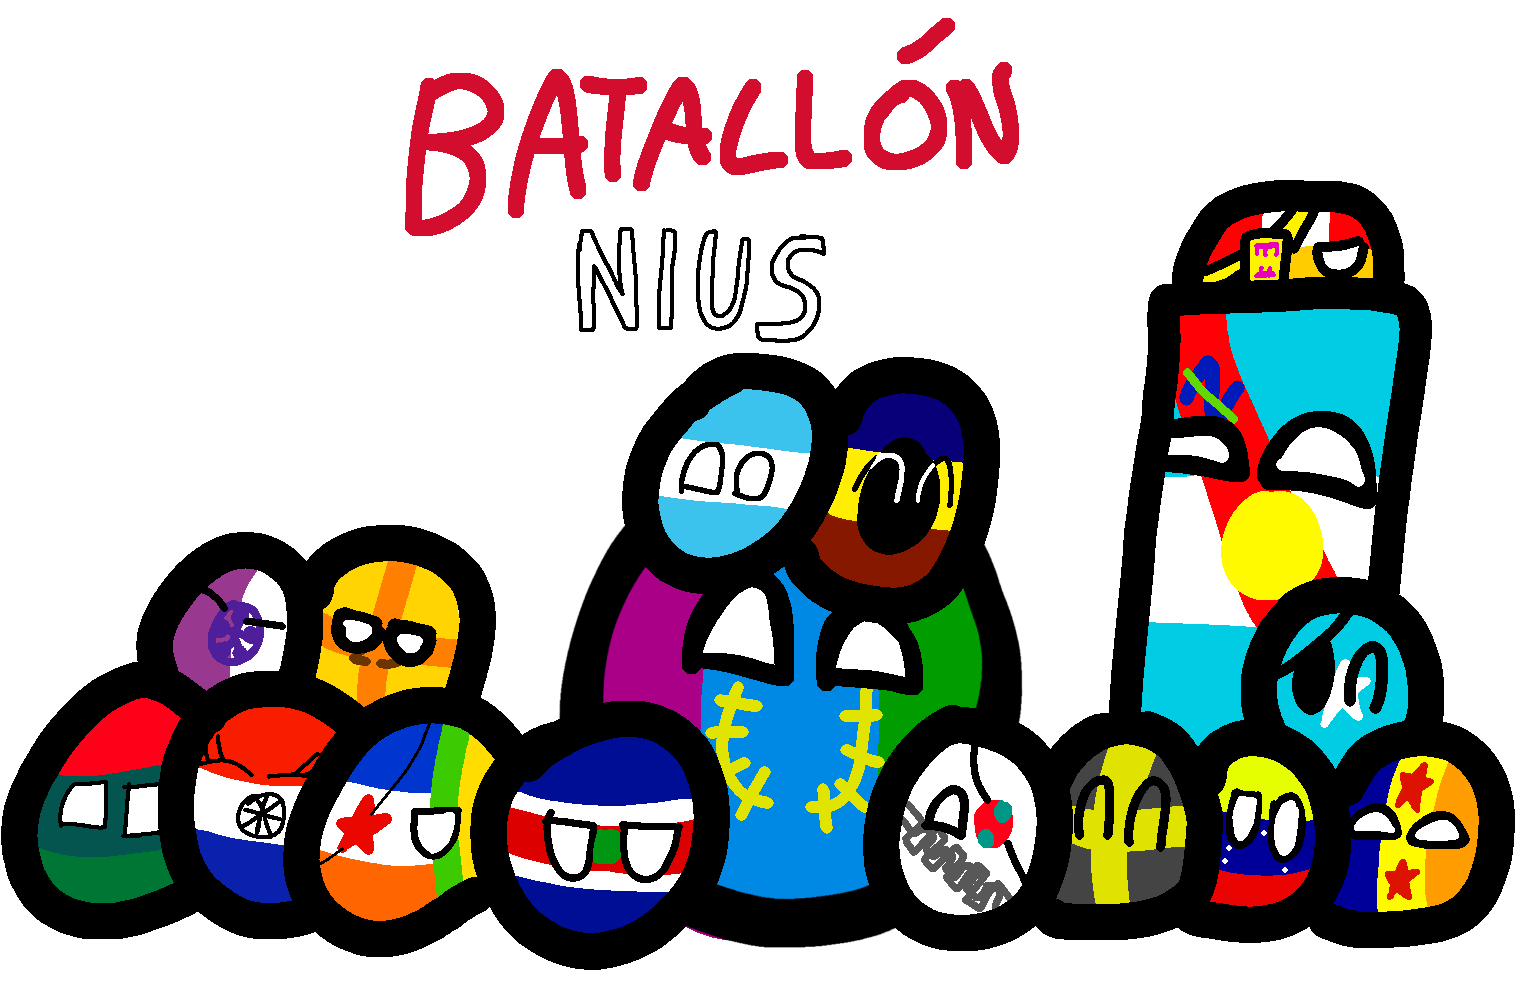 Batallón Nius by Andree.png